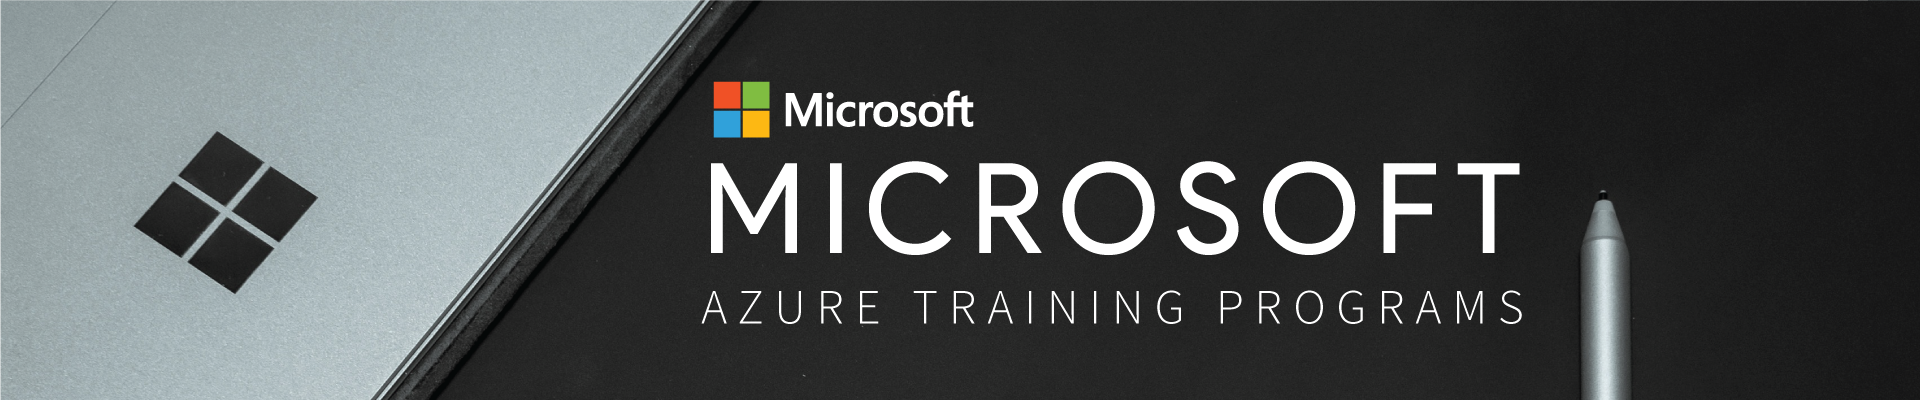 Microsoft Azure Programs - Banner